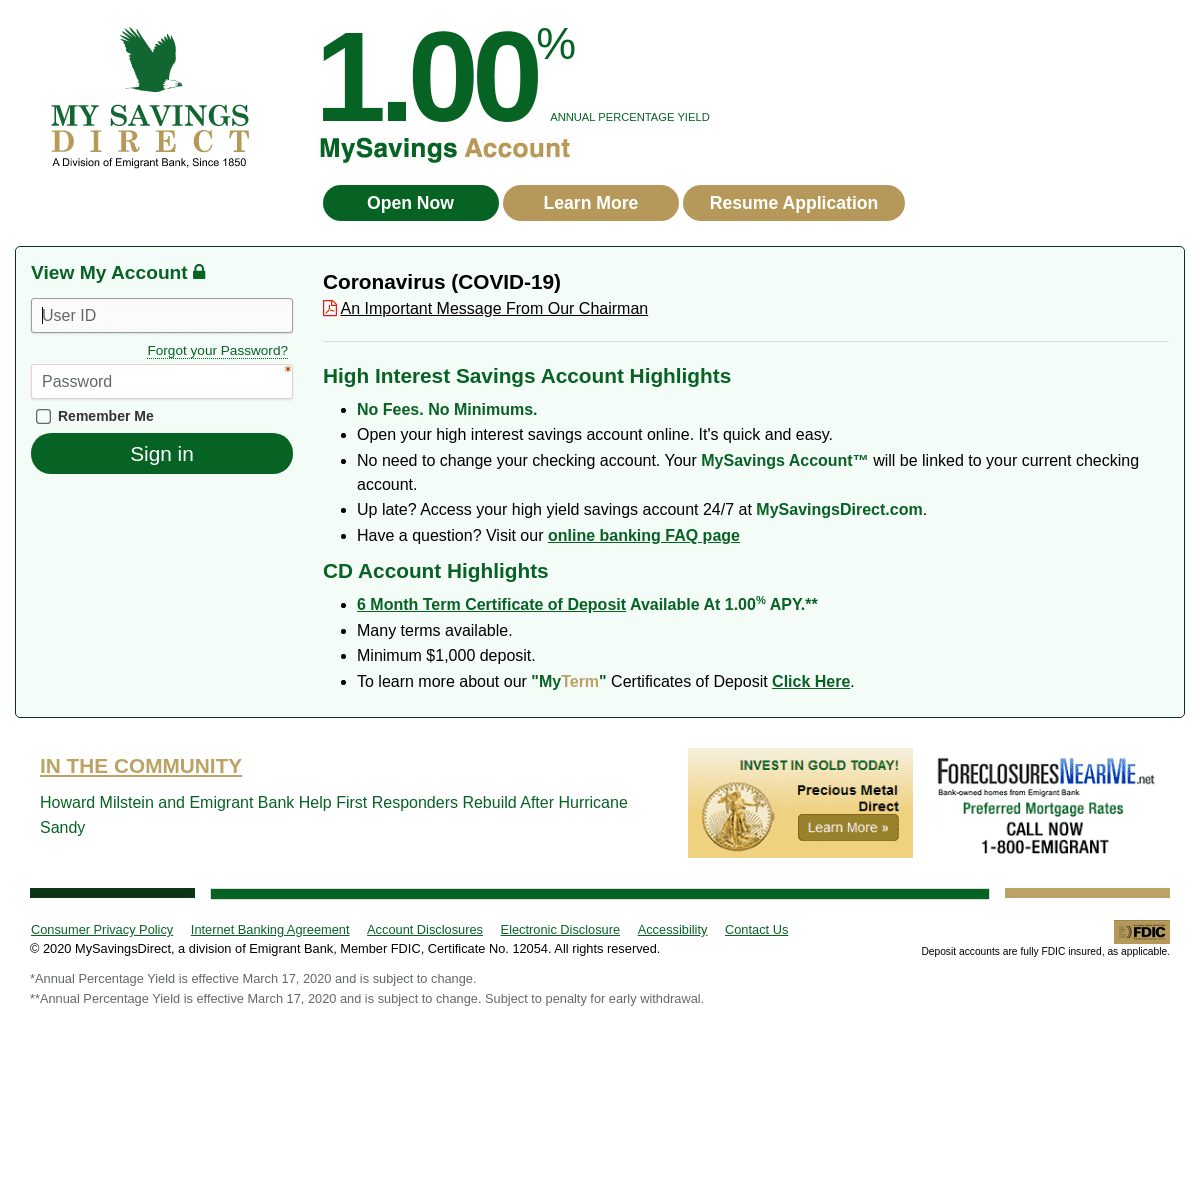 A complete backup of mysavingsdirect.com